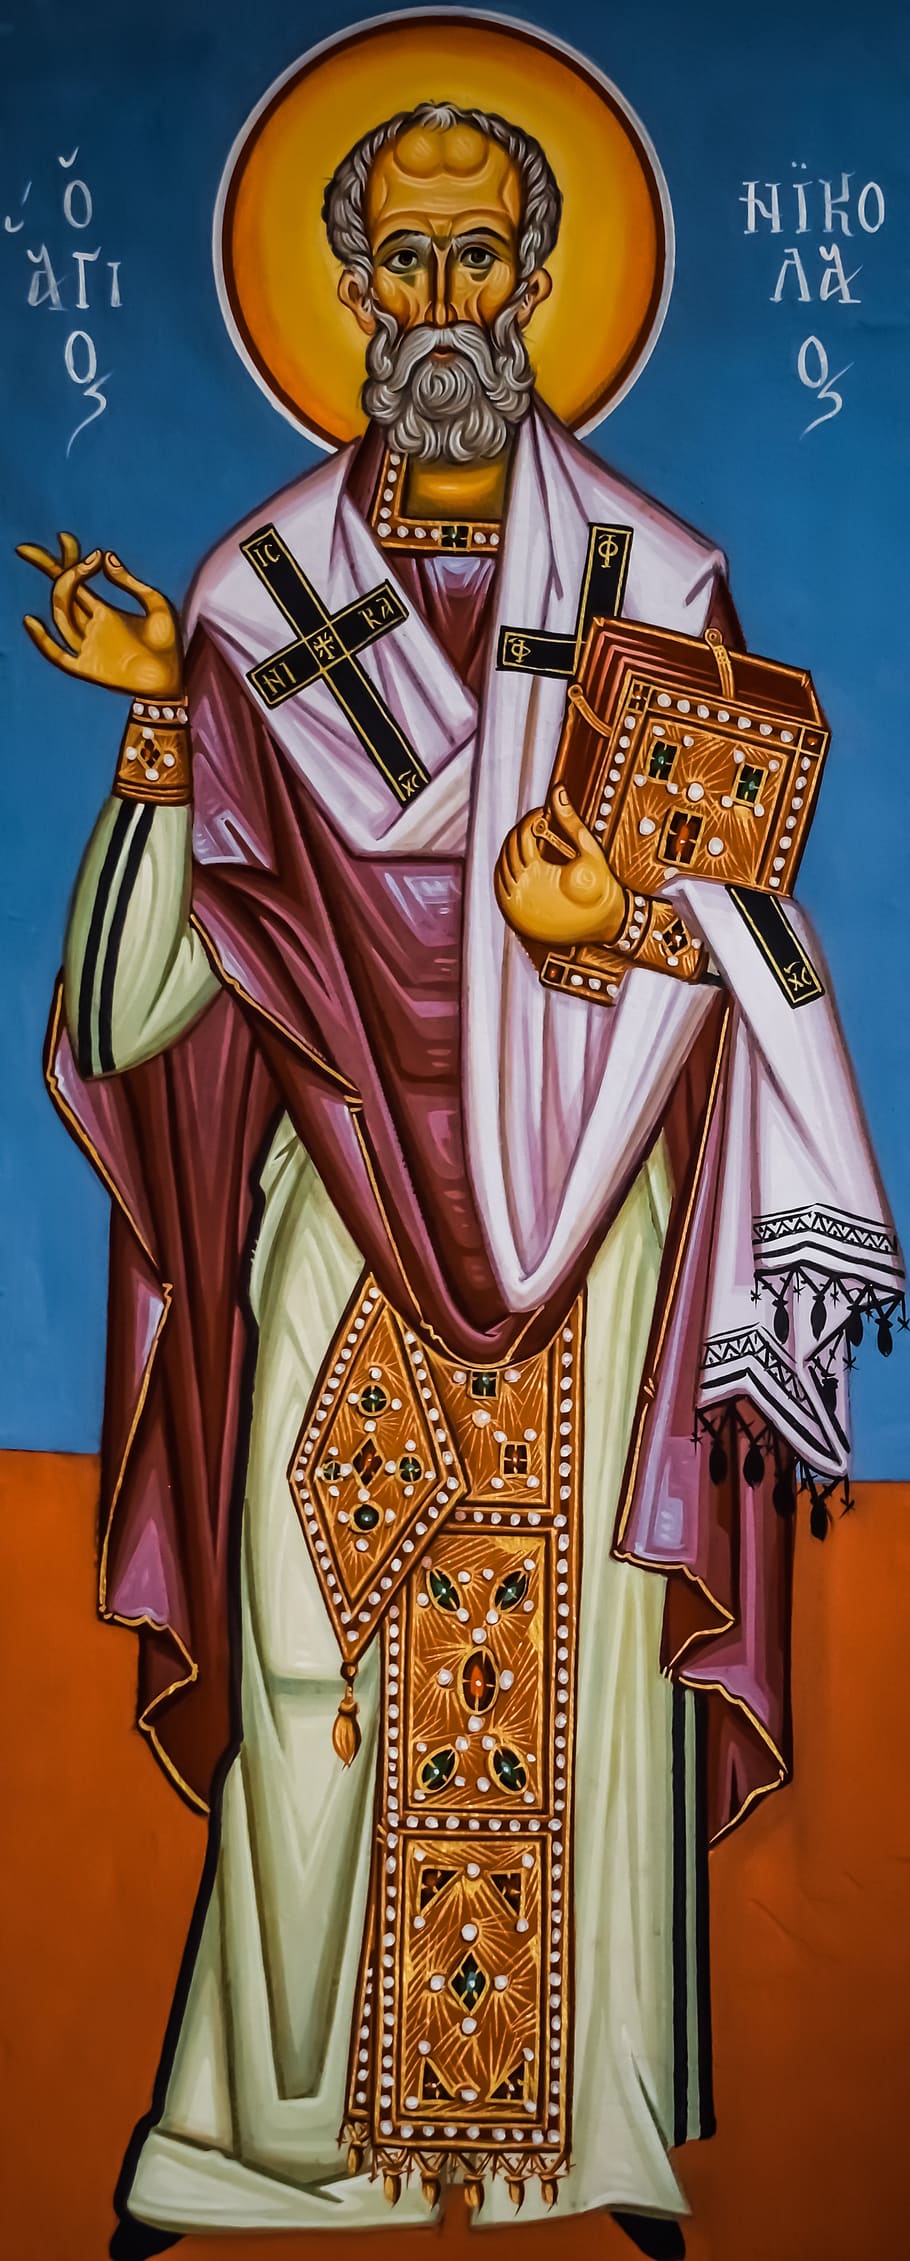 saint nickolas, ayios nikolaos, religion, painting, iconography, church, byzantine, style, paralimni, cyprus